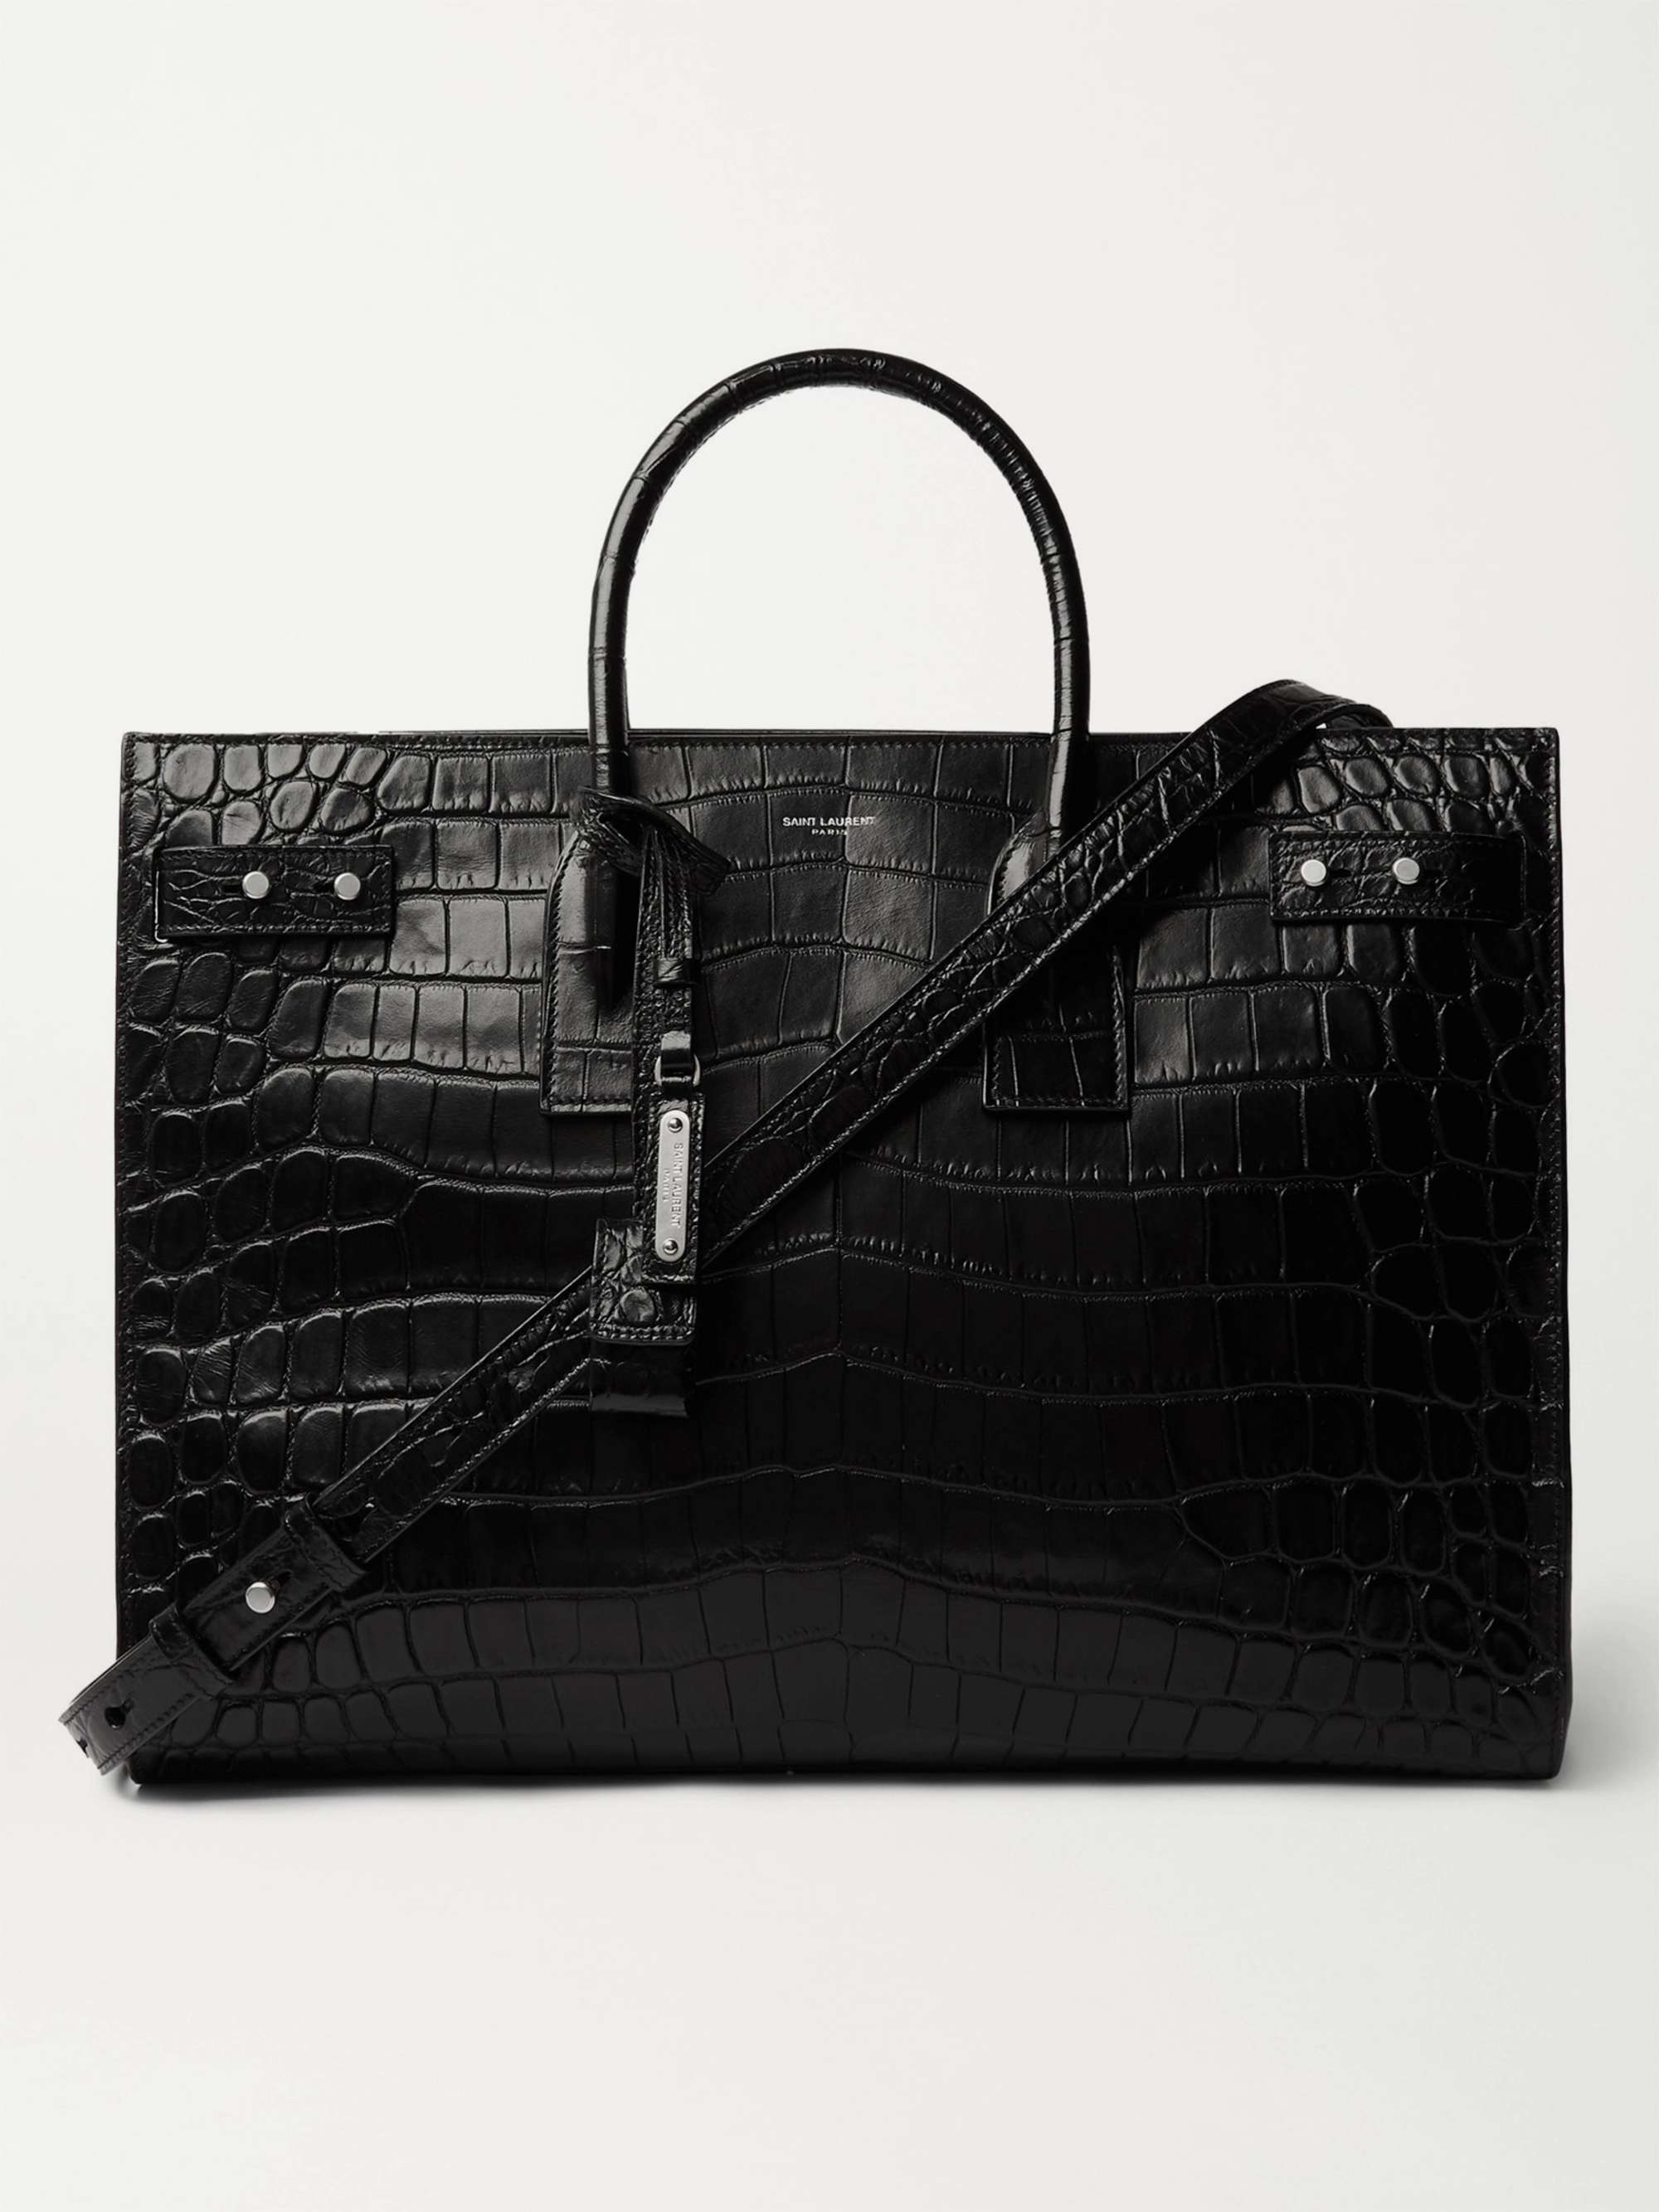 SAINT LAURENT Croc-Effect Leather Tote Bag for Men | MR PORTER